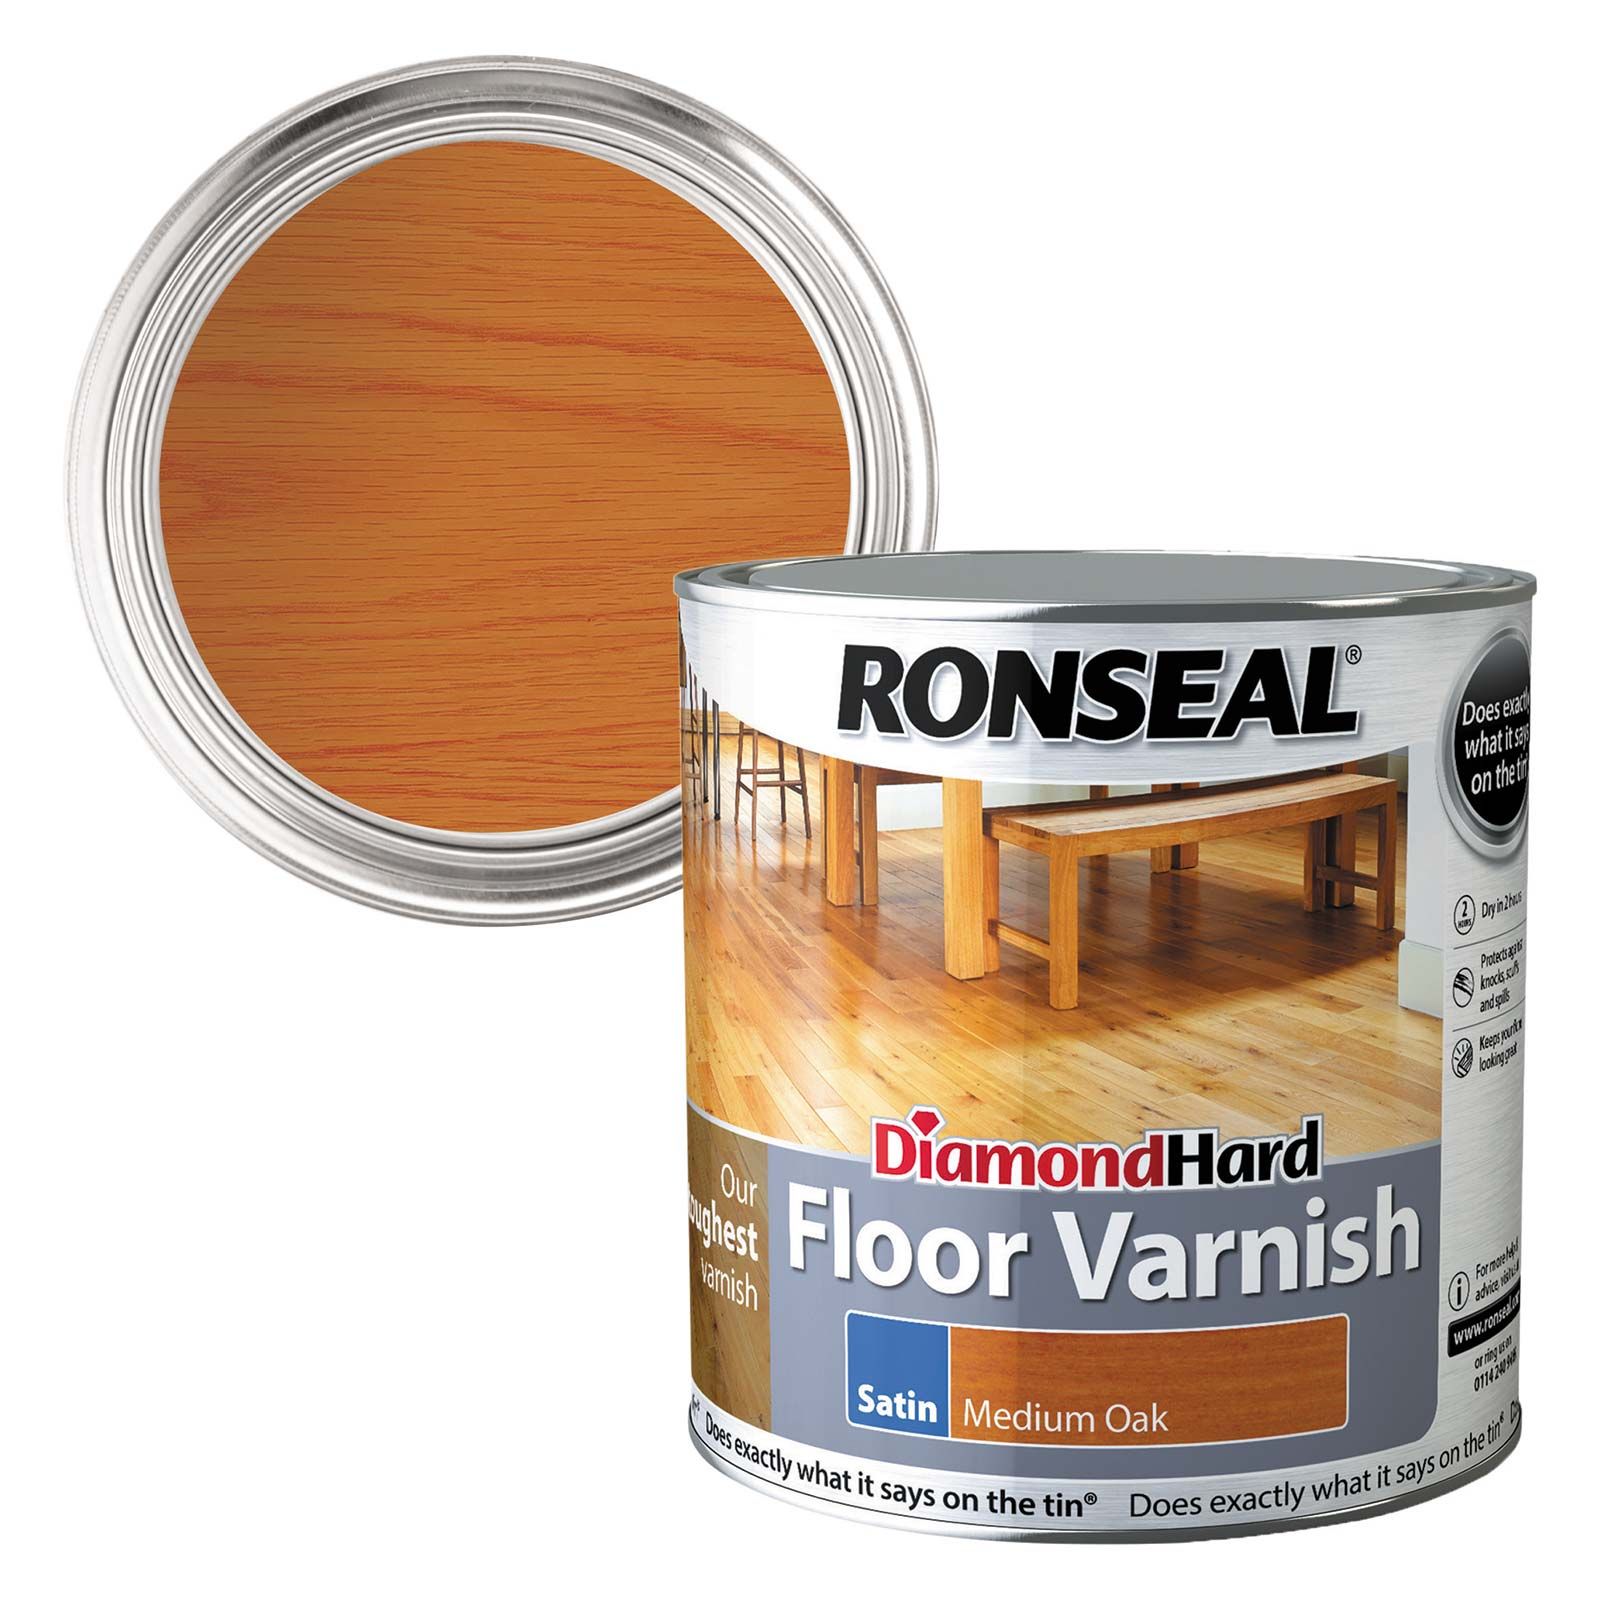 Ronseal Diamond Hard Floor Varnish Medium Oak Satin 2 5ltr Selco